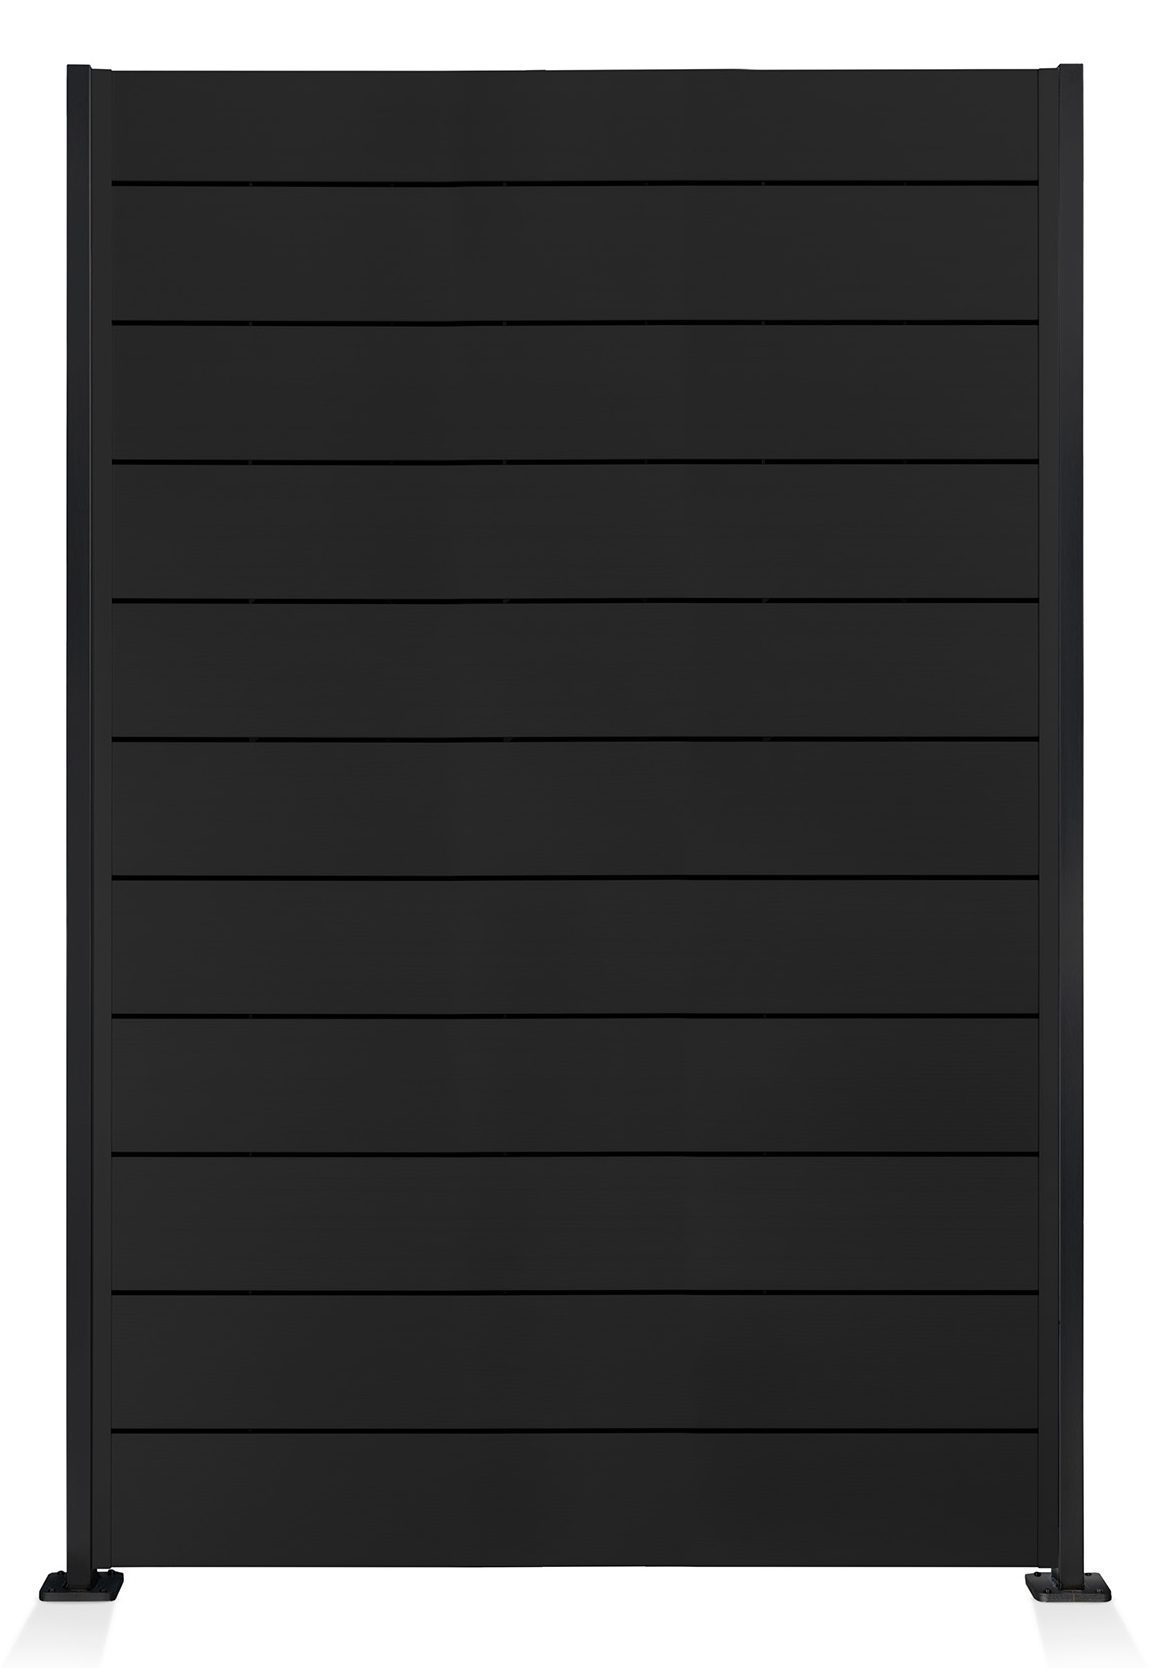 ausschnitt_0008_element-solar-sichtschutz-pv-photovoltaik-zaun-collection-hutter-panel-lamellen-schwarz-pfosten-schwarz-